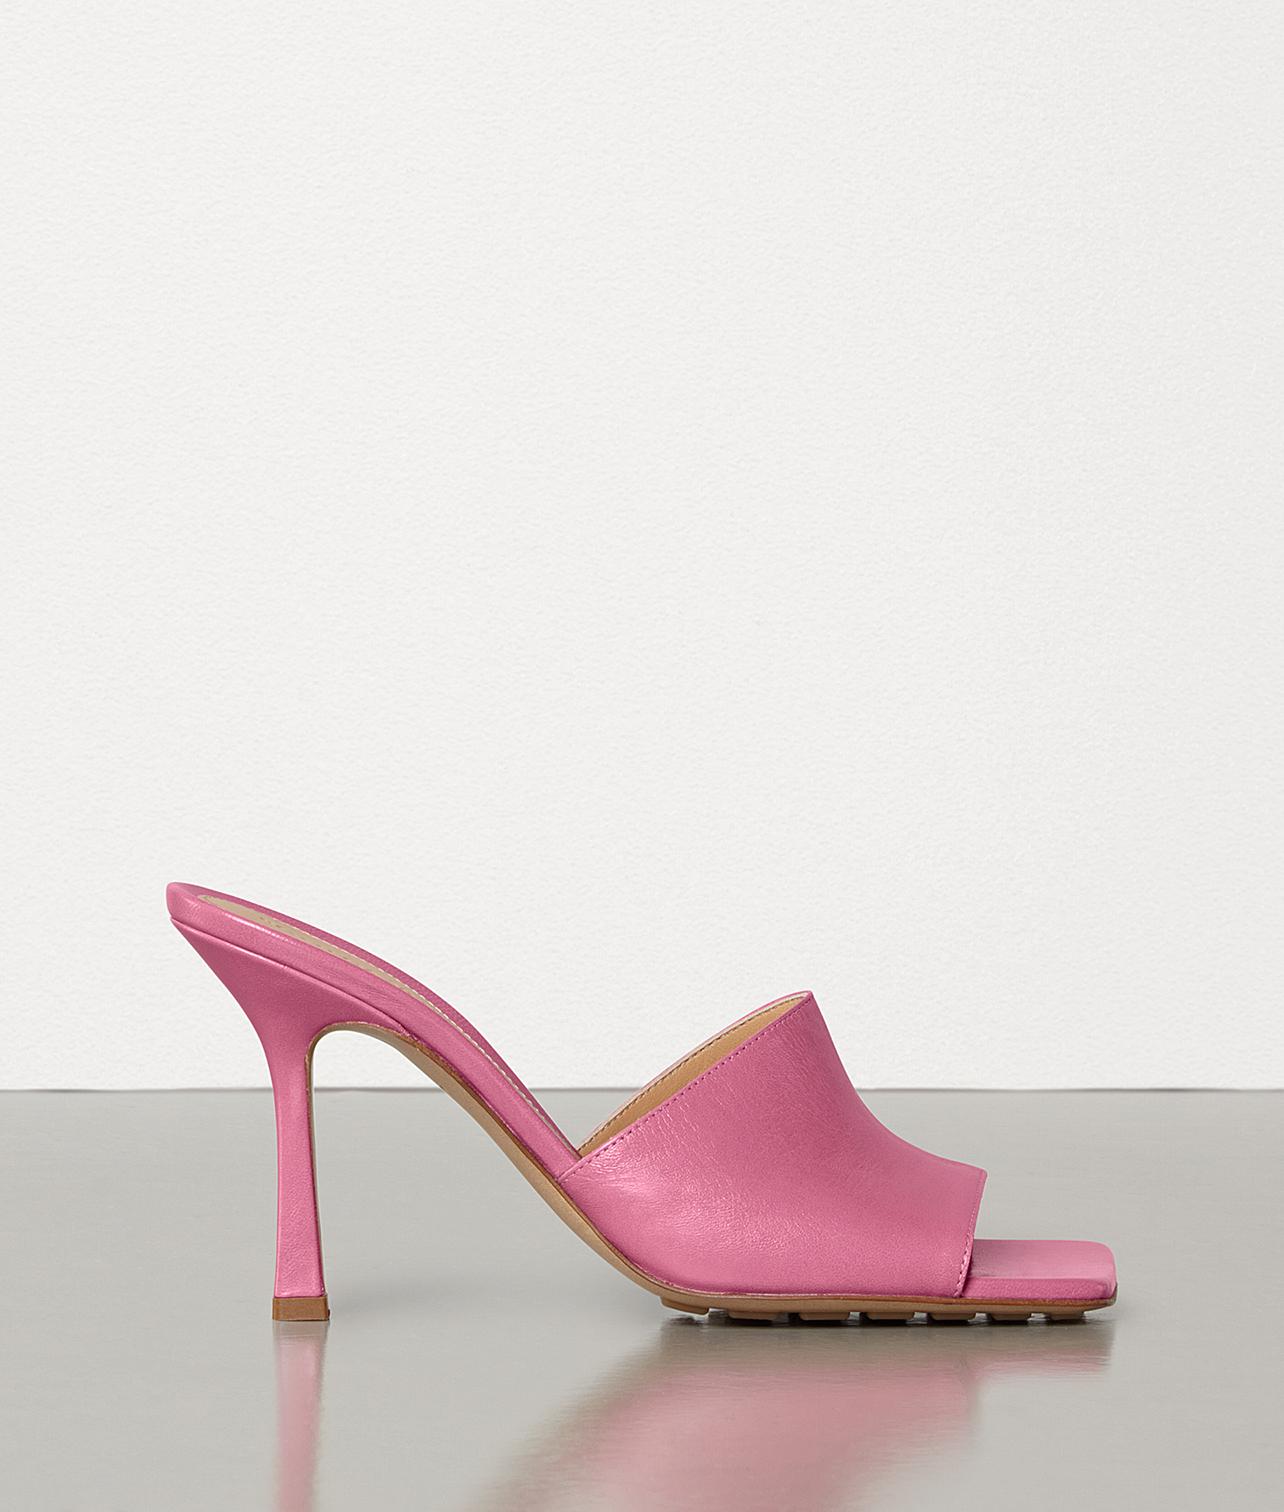 Bottega Veneta Stretch Sandals in Pink | Lyst